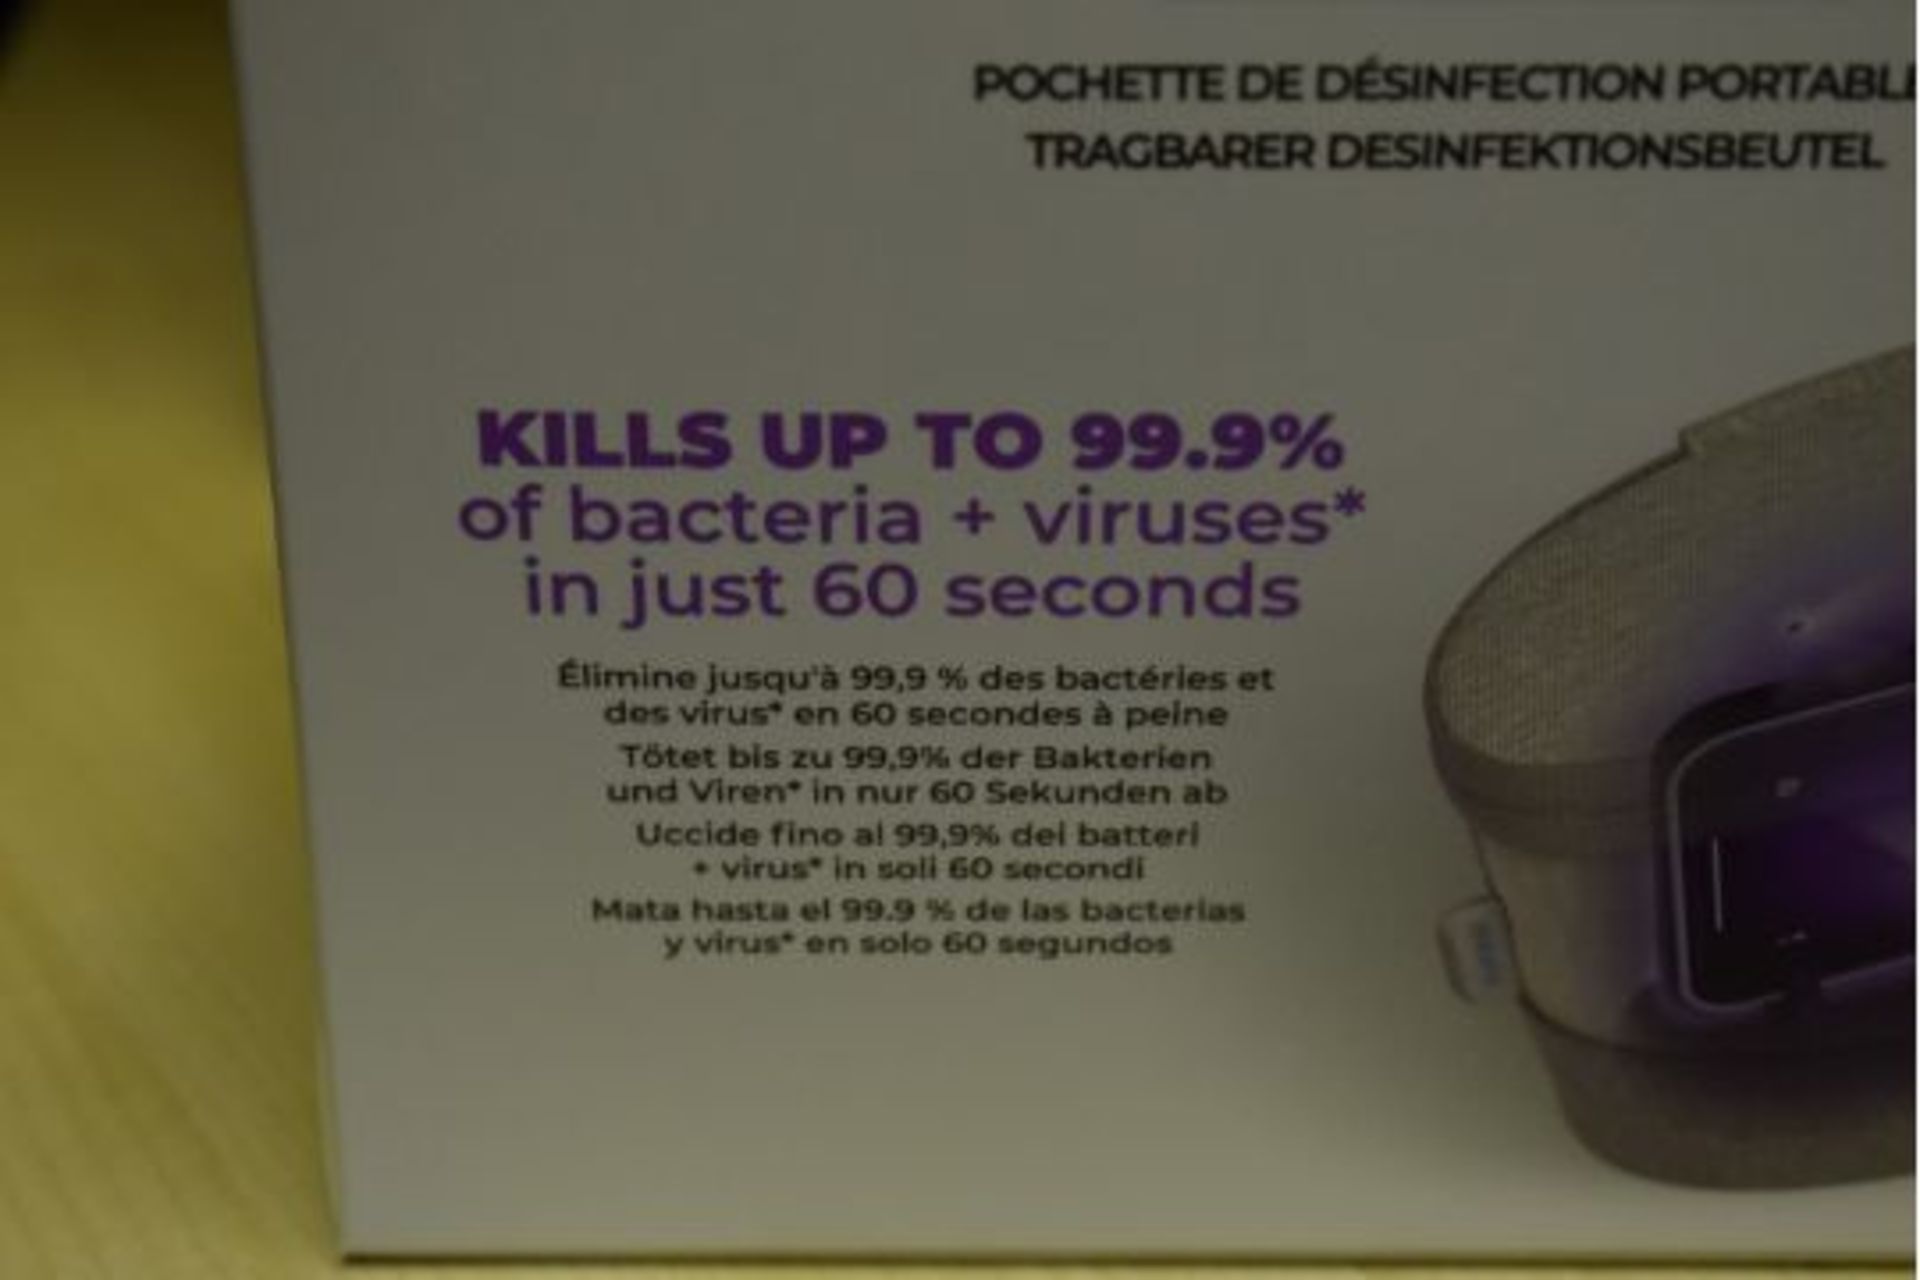 1 x Homedics UV Clean Portable Sanitiser Bag - Kills Upto 99.9% of Bacteria & Viruses in Just 60 - Image 3 of 24